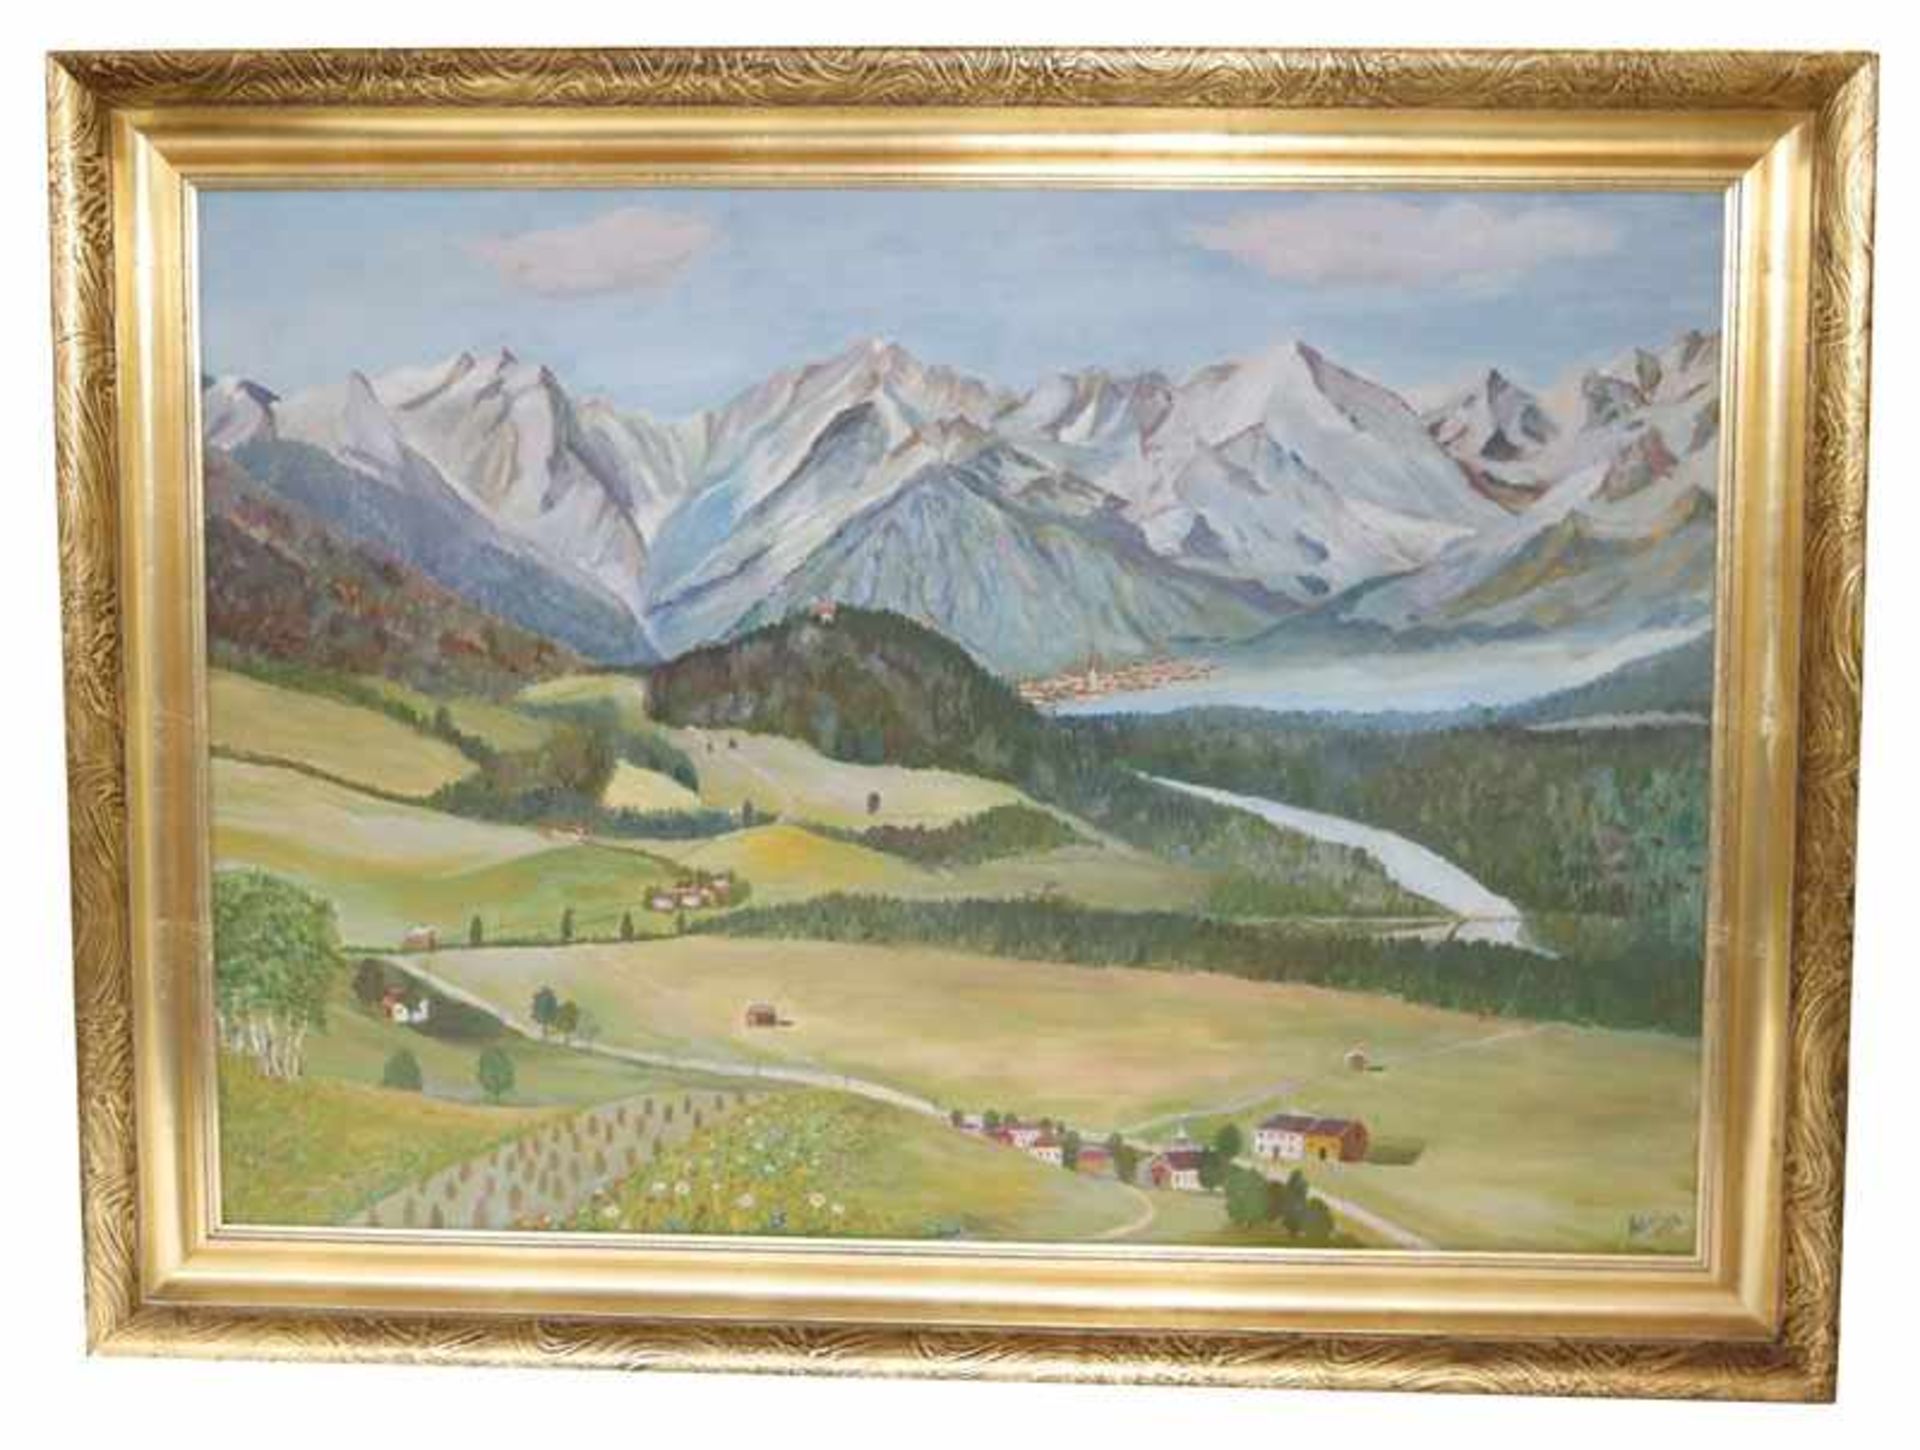 Gemälde ÖL/LW 'Allgäuer Berge in Oberstdorf', signiert Abol 1958, gerahmt, Rahmen bestossen, incl.